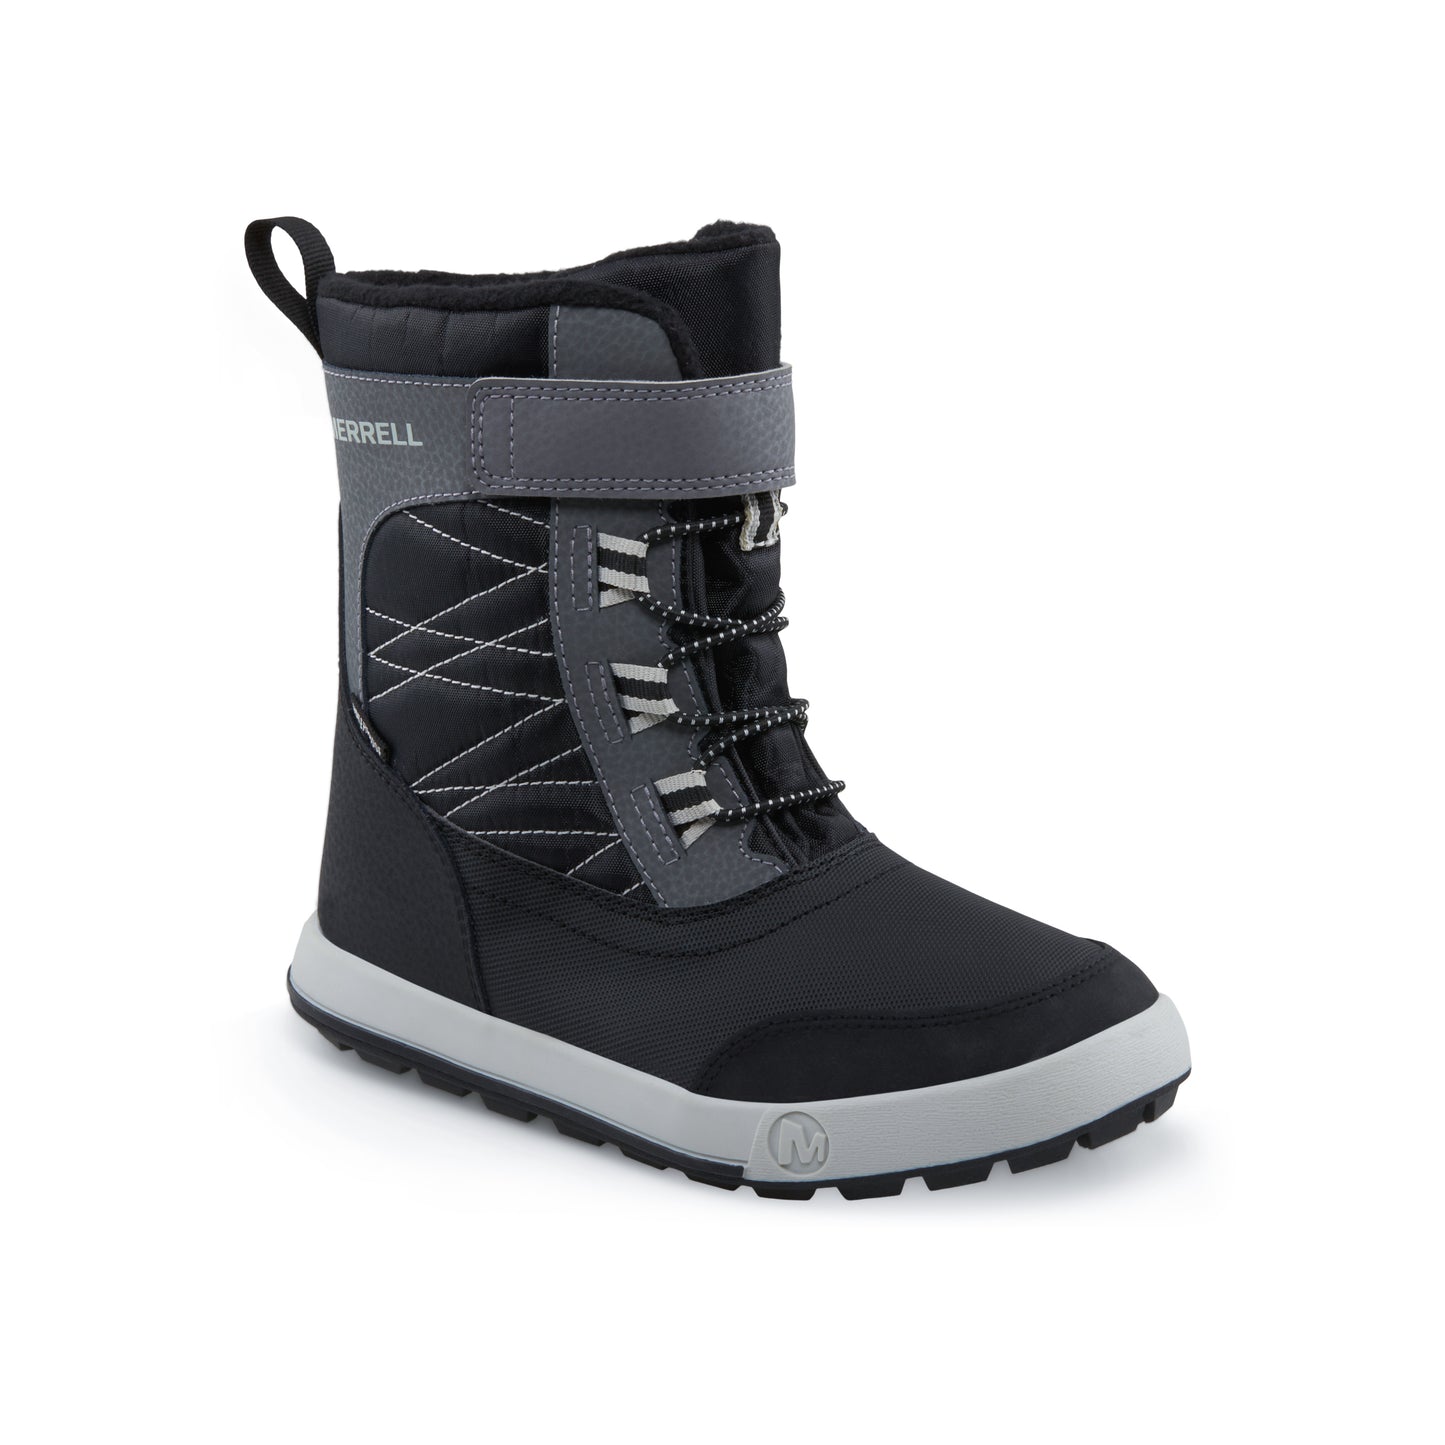 Snow Storm 2.0 Waterproof Boot Grey/Black